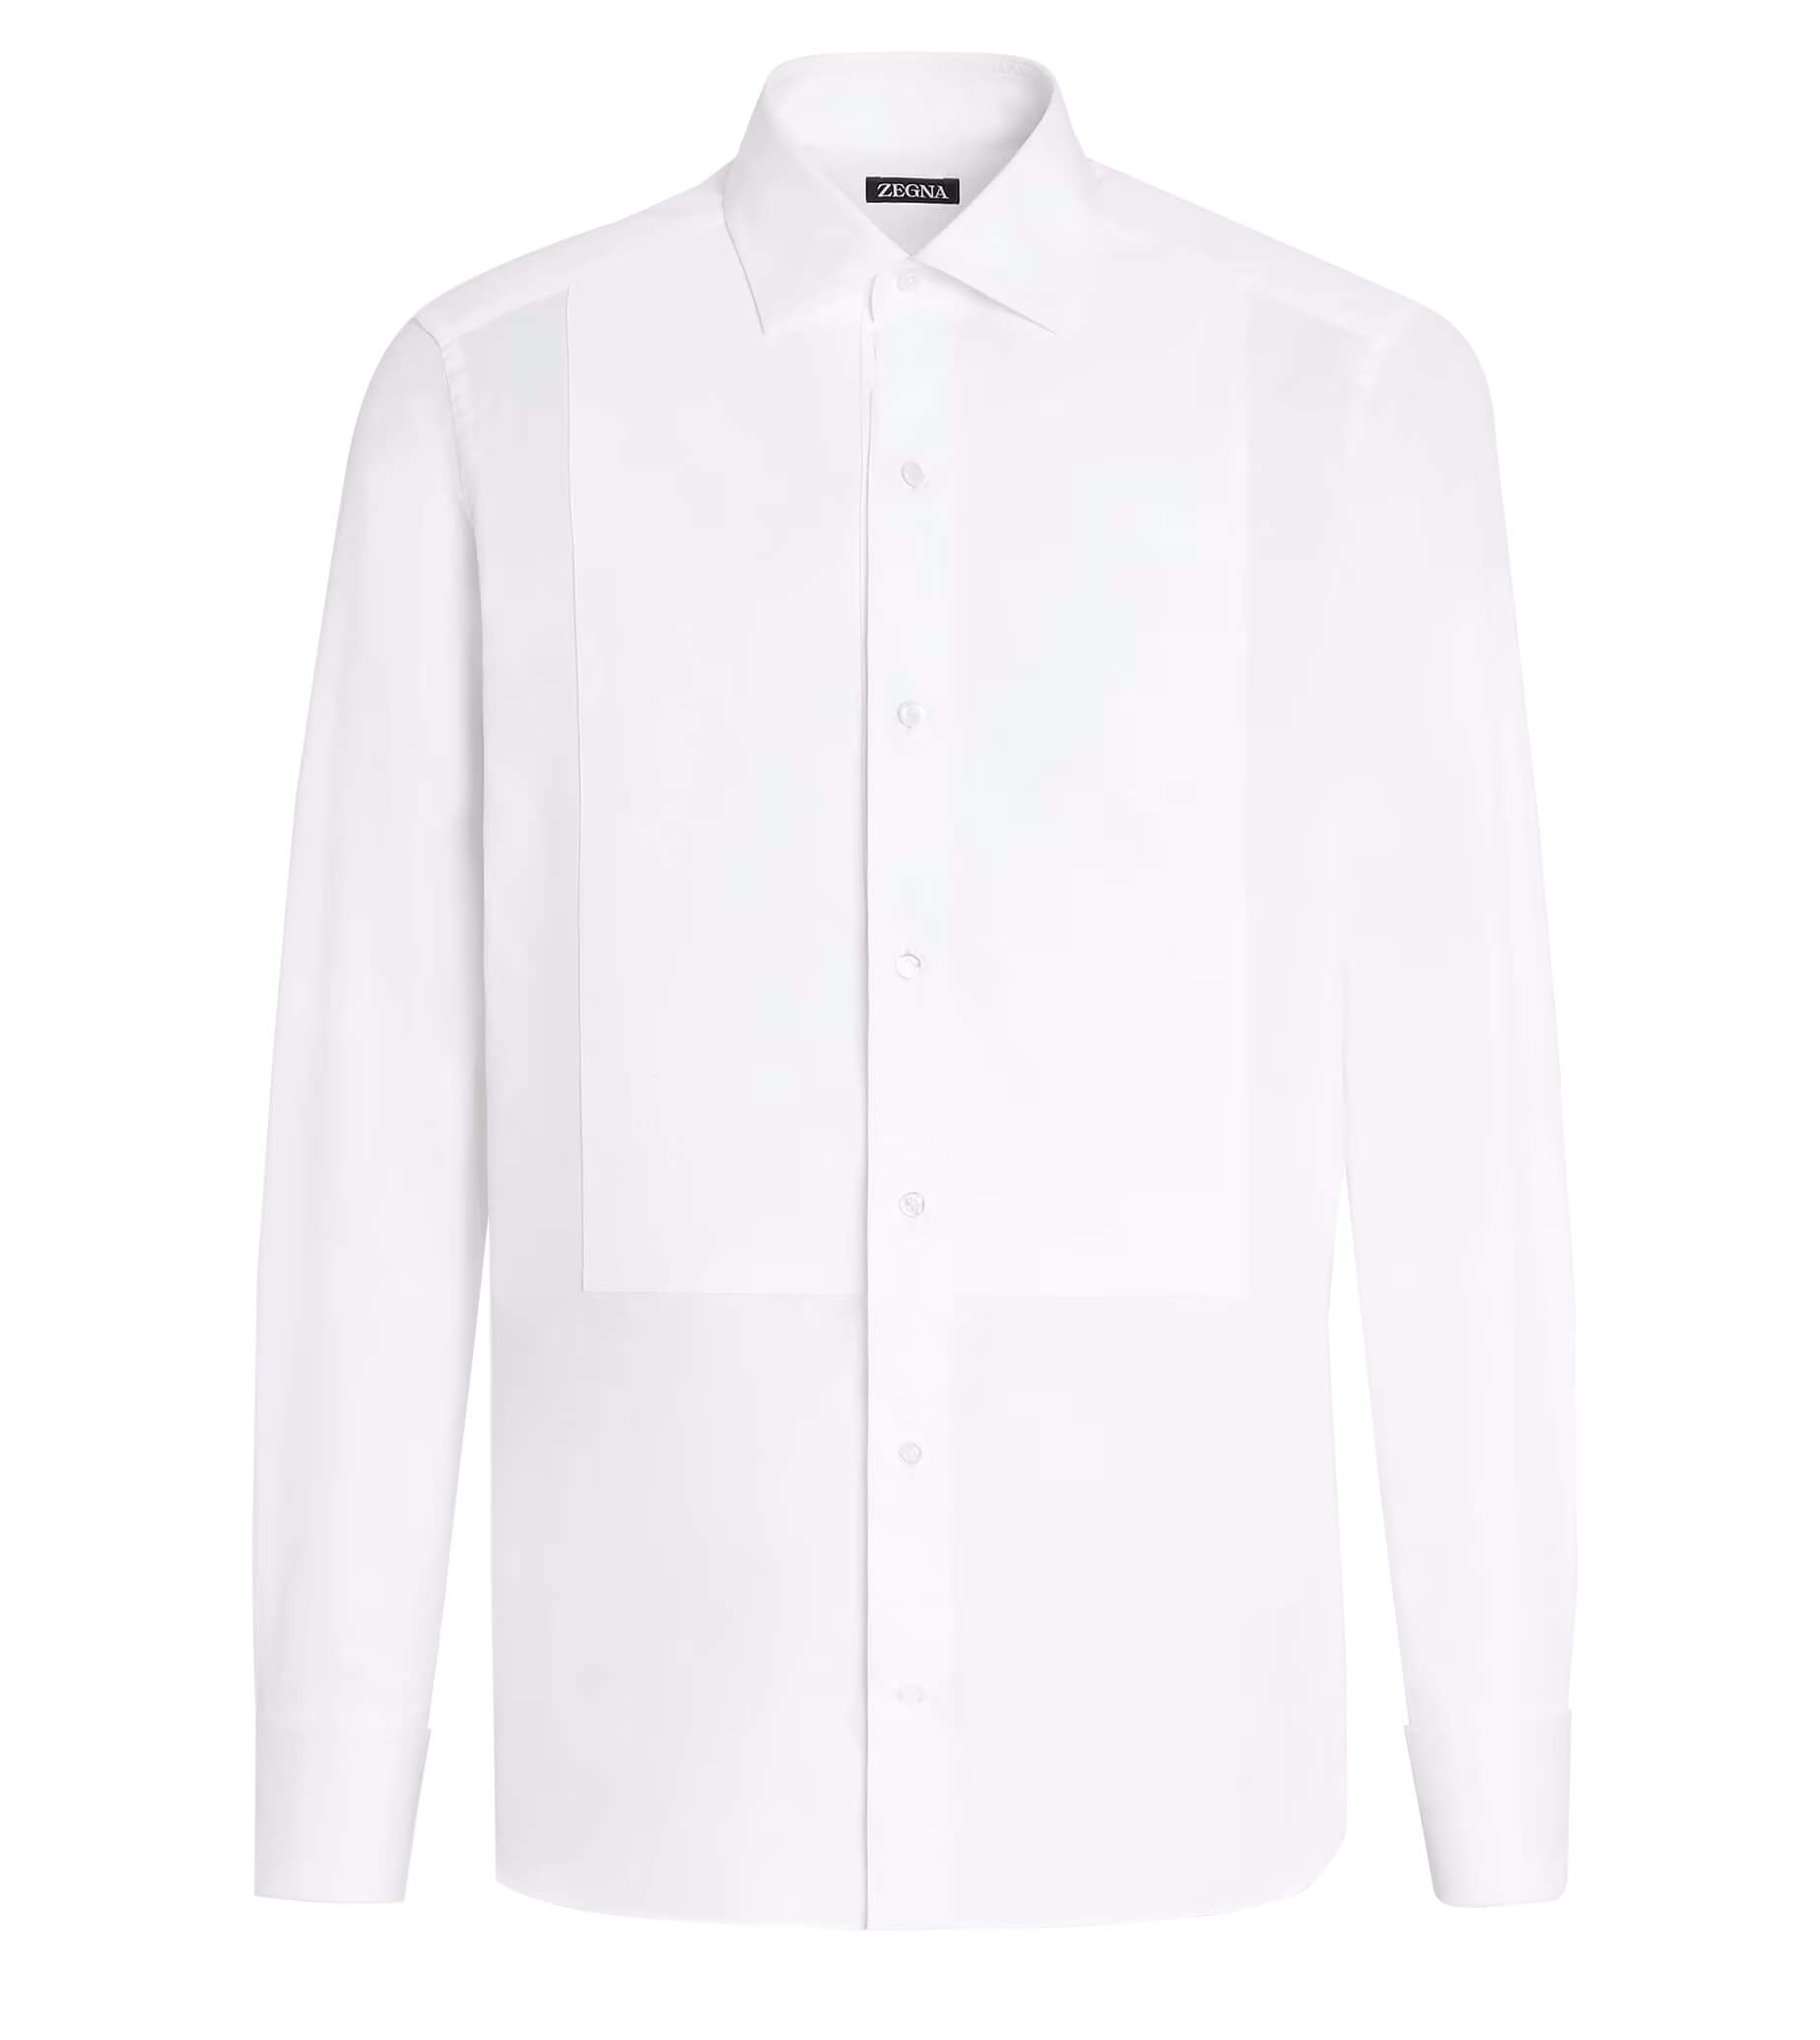 ZEGNA Barrel Cuff White Dress Shirt